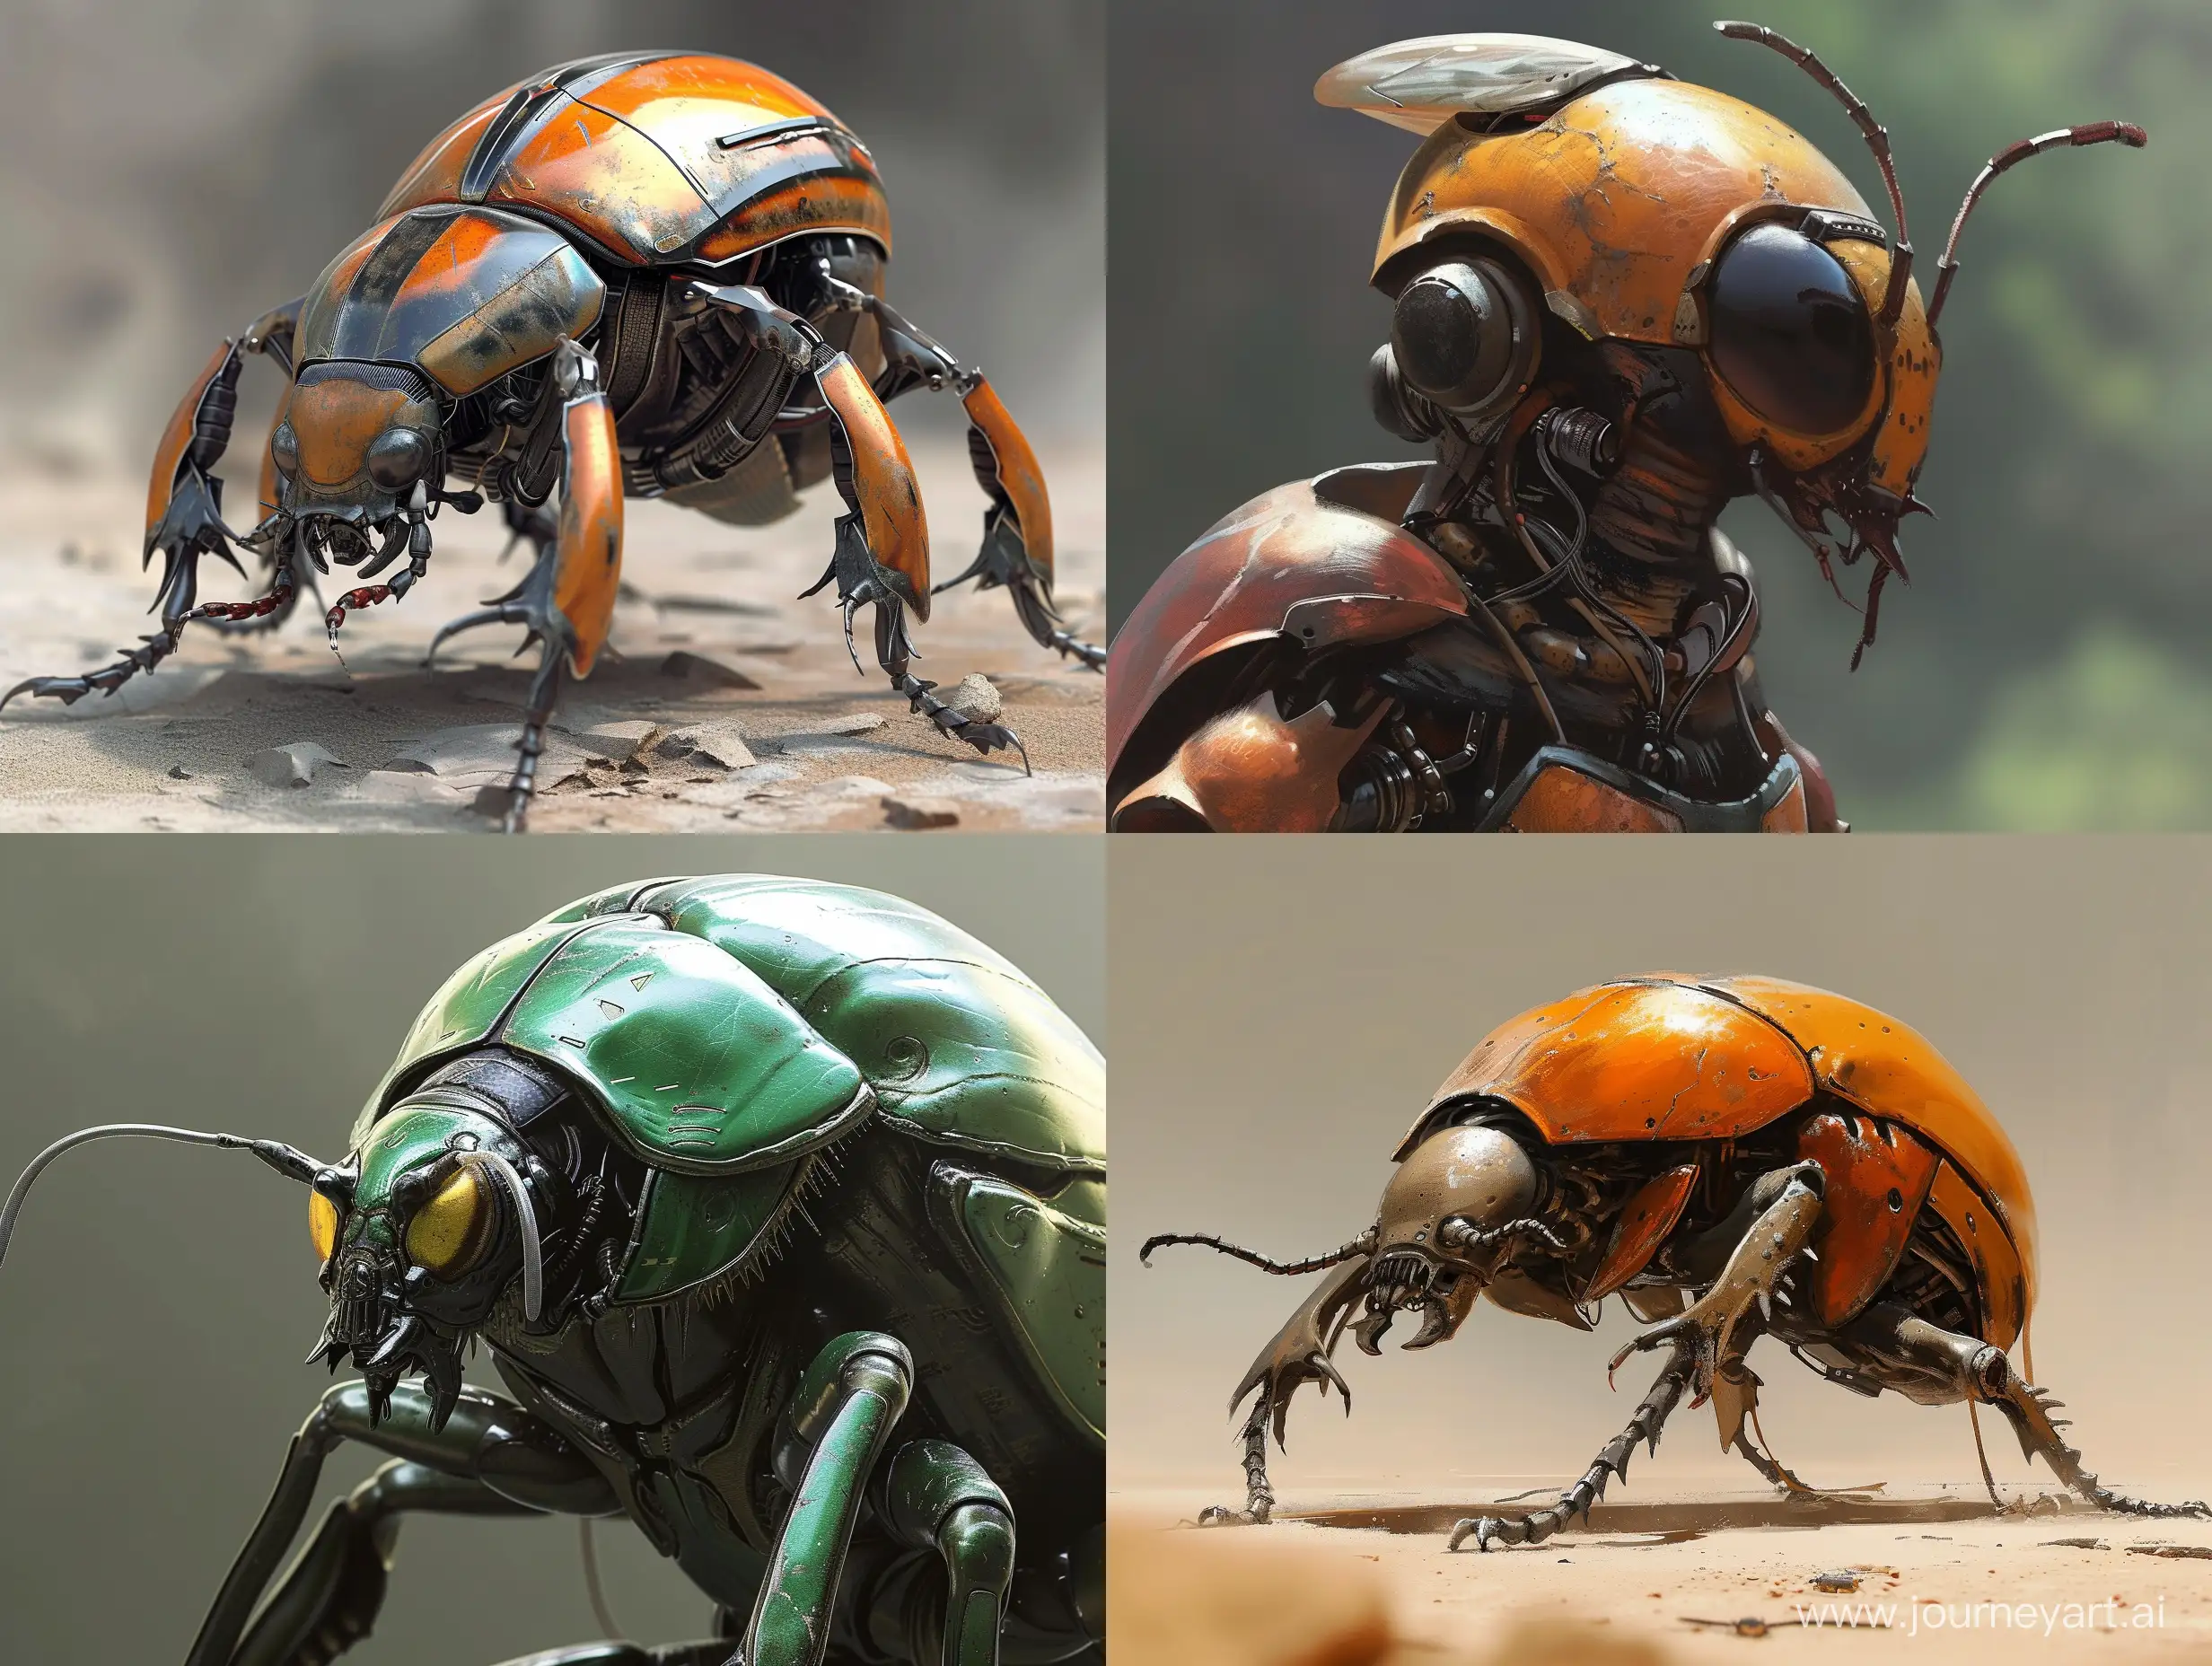 Exploring-the-Alien-World-Humanoid-Beetle-Encounter